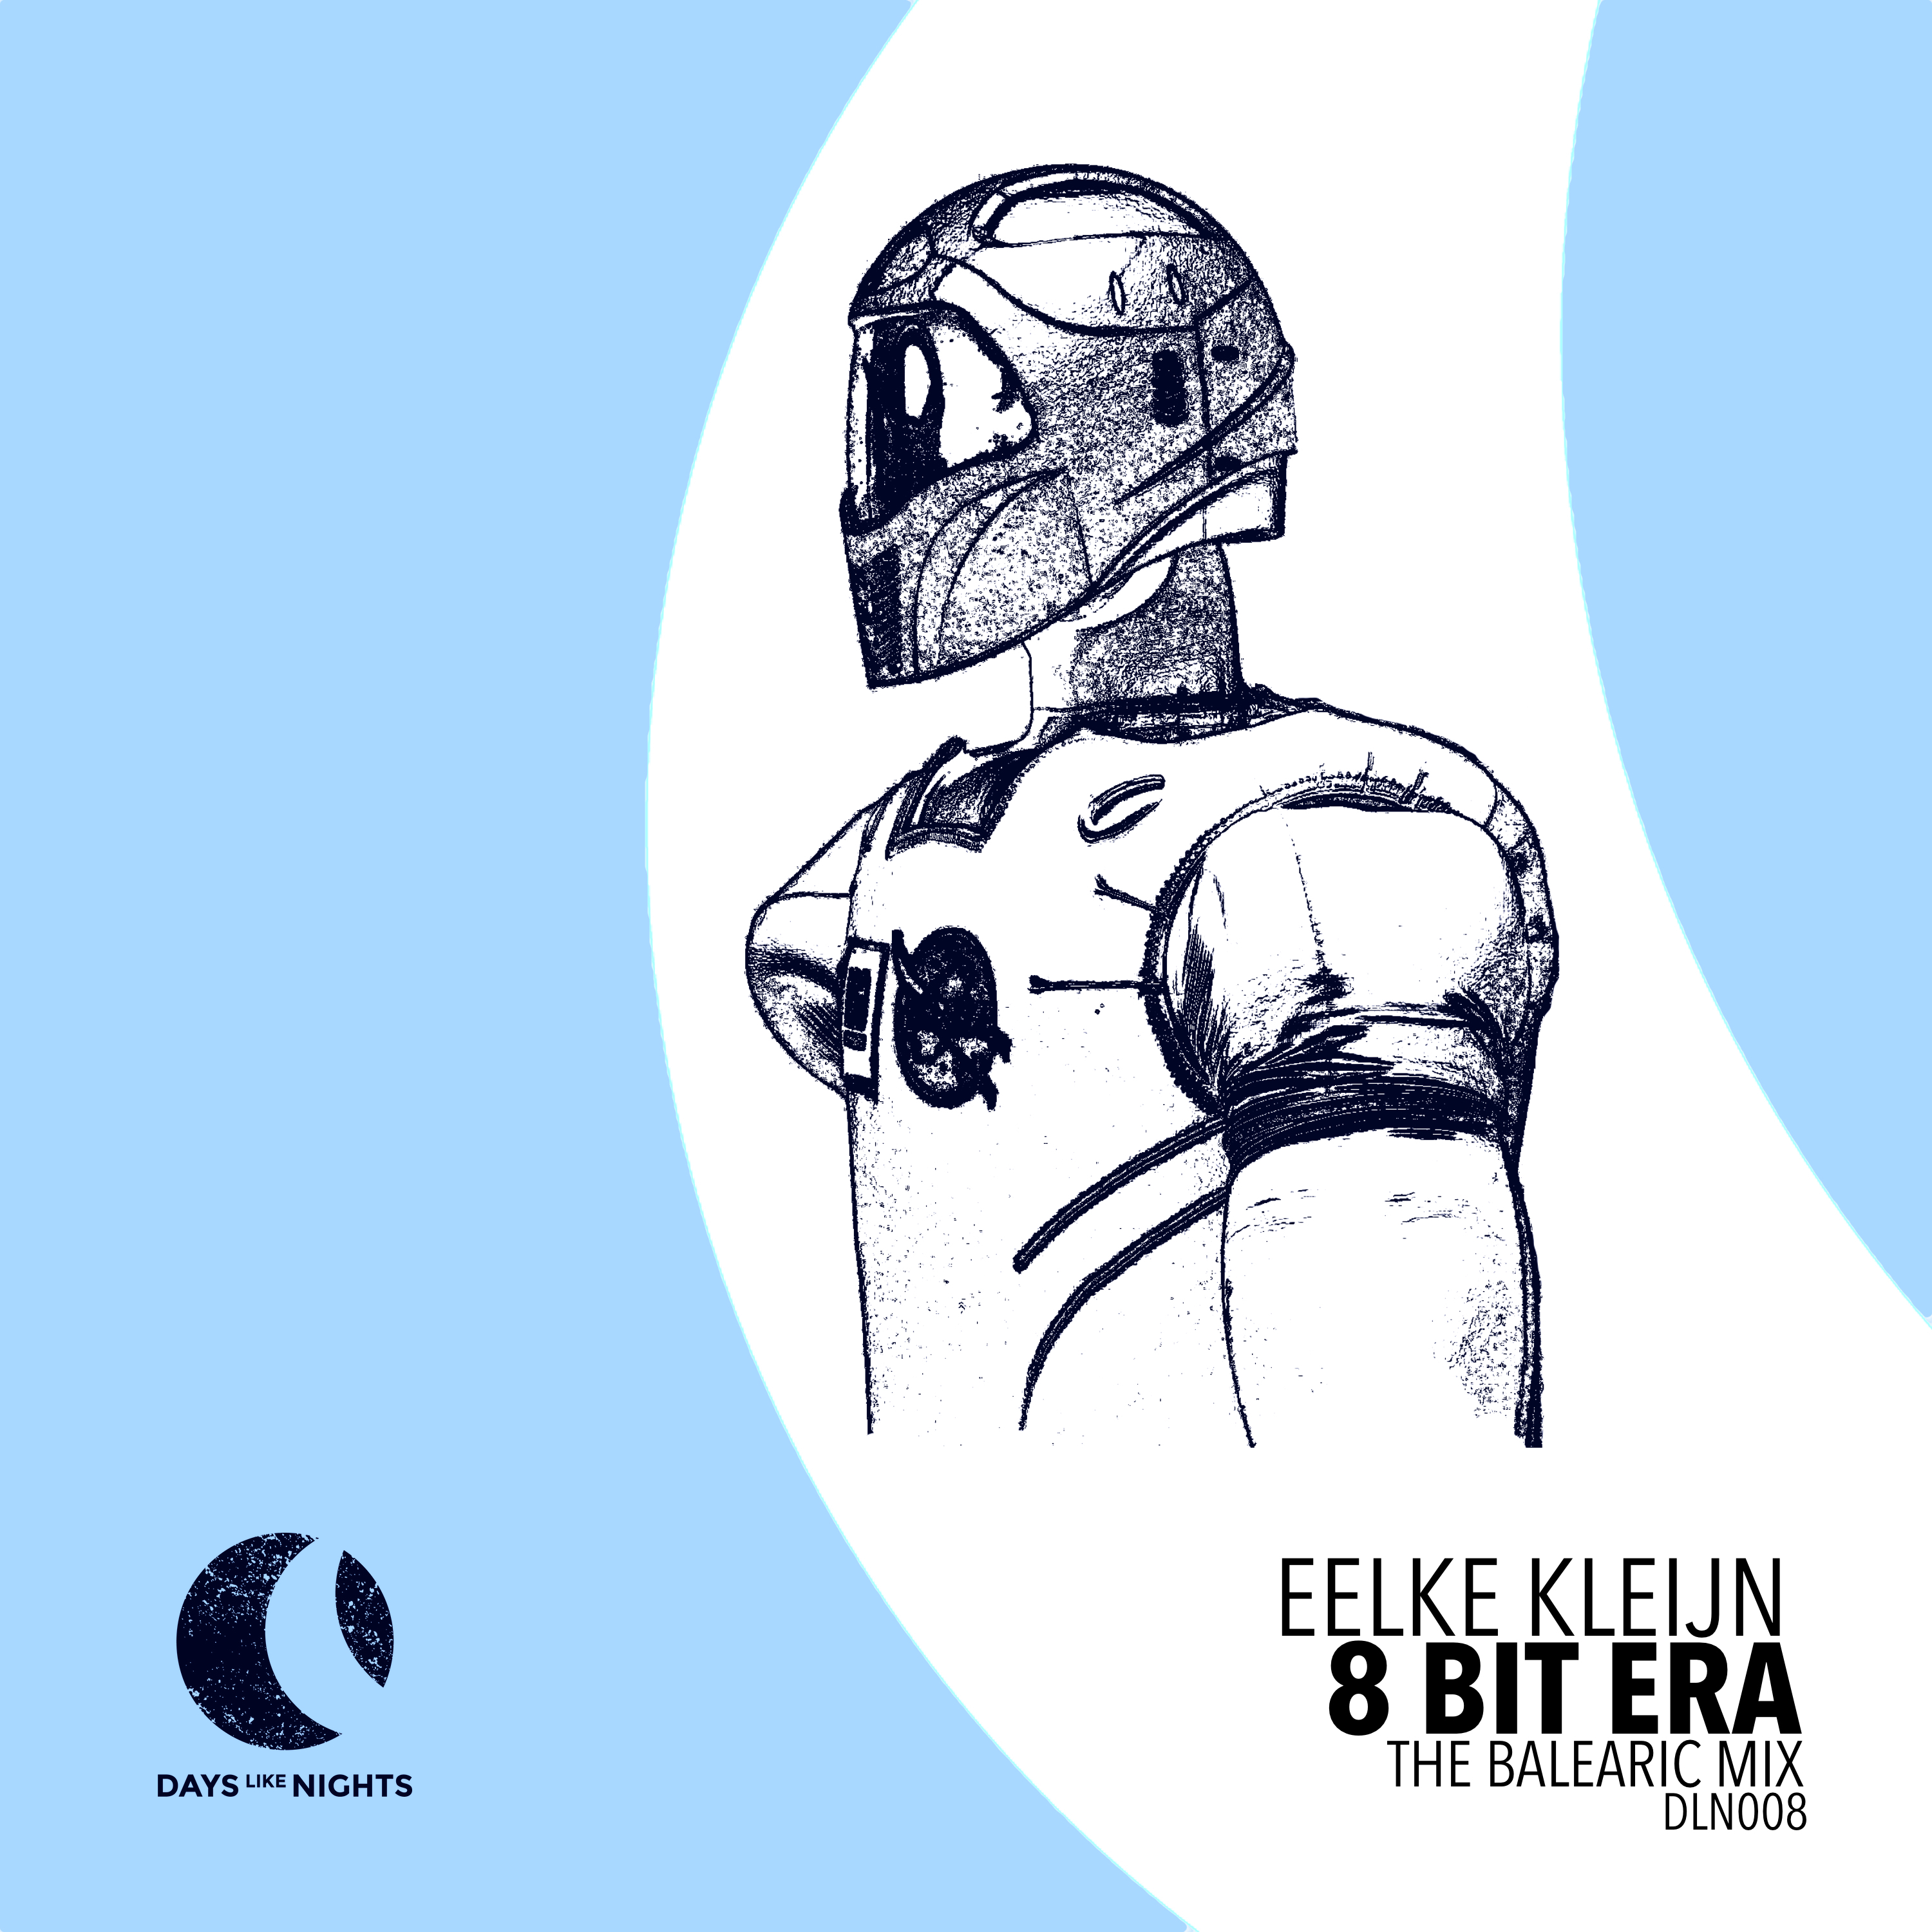 8 Bit Era (The Balearic Mix)